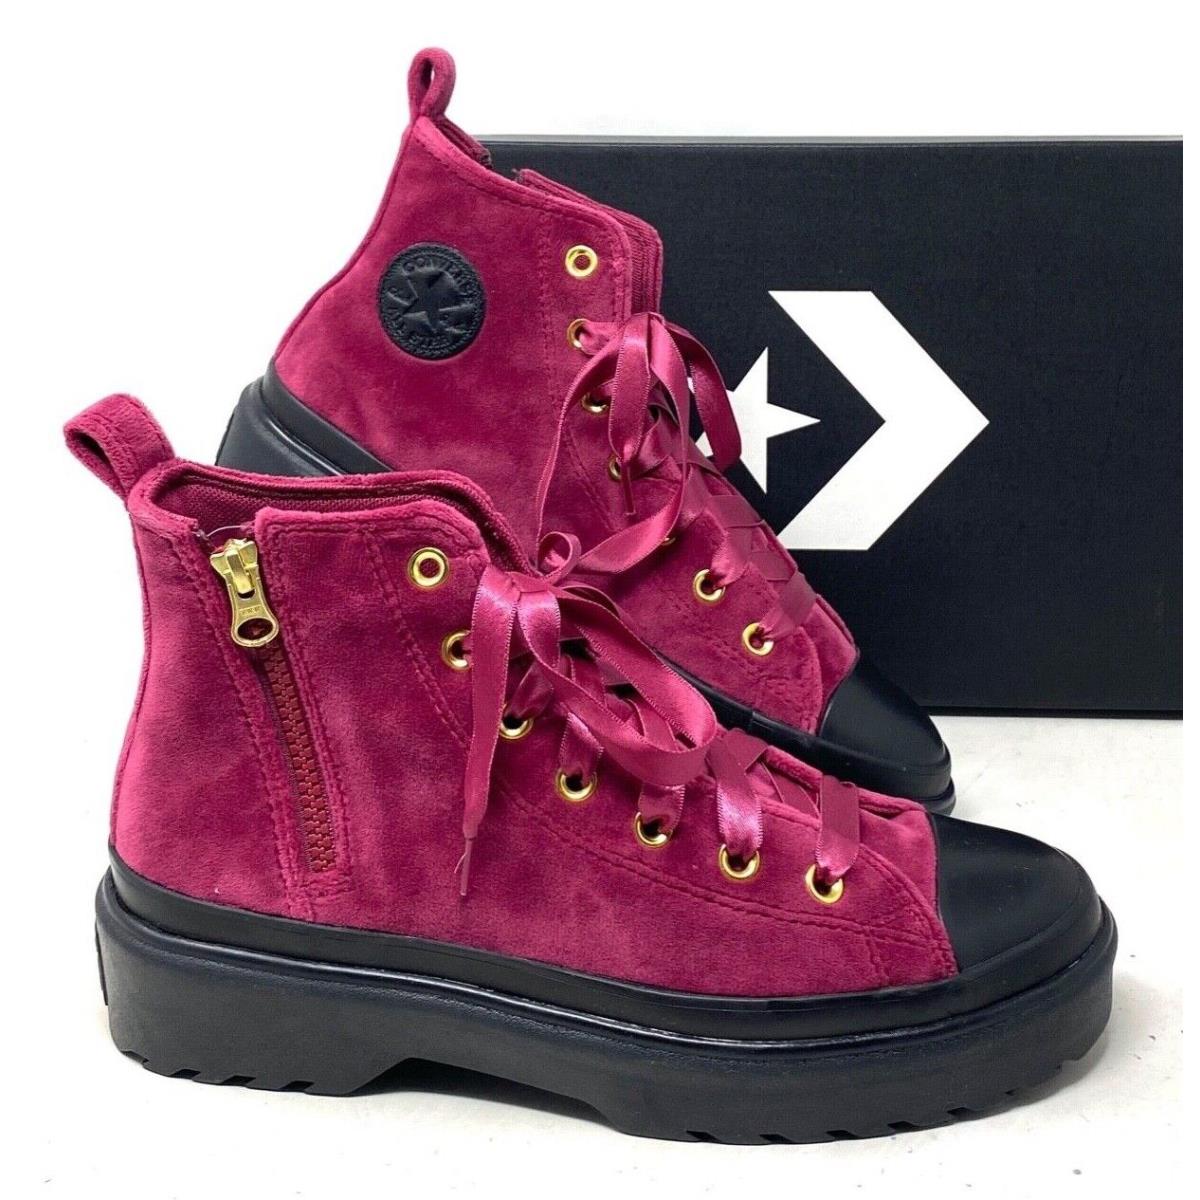 Converse Chuck Taylor Lugged Lift Platform Velvet Berry Shoes Women Kids A05442C